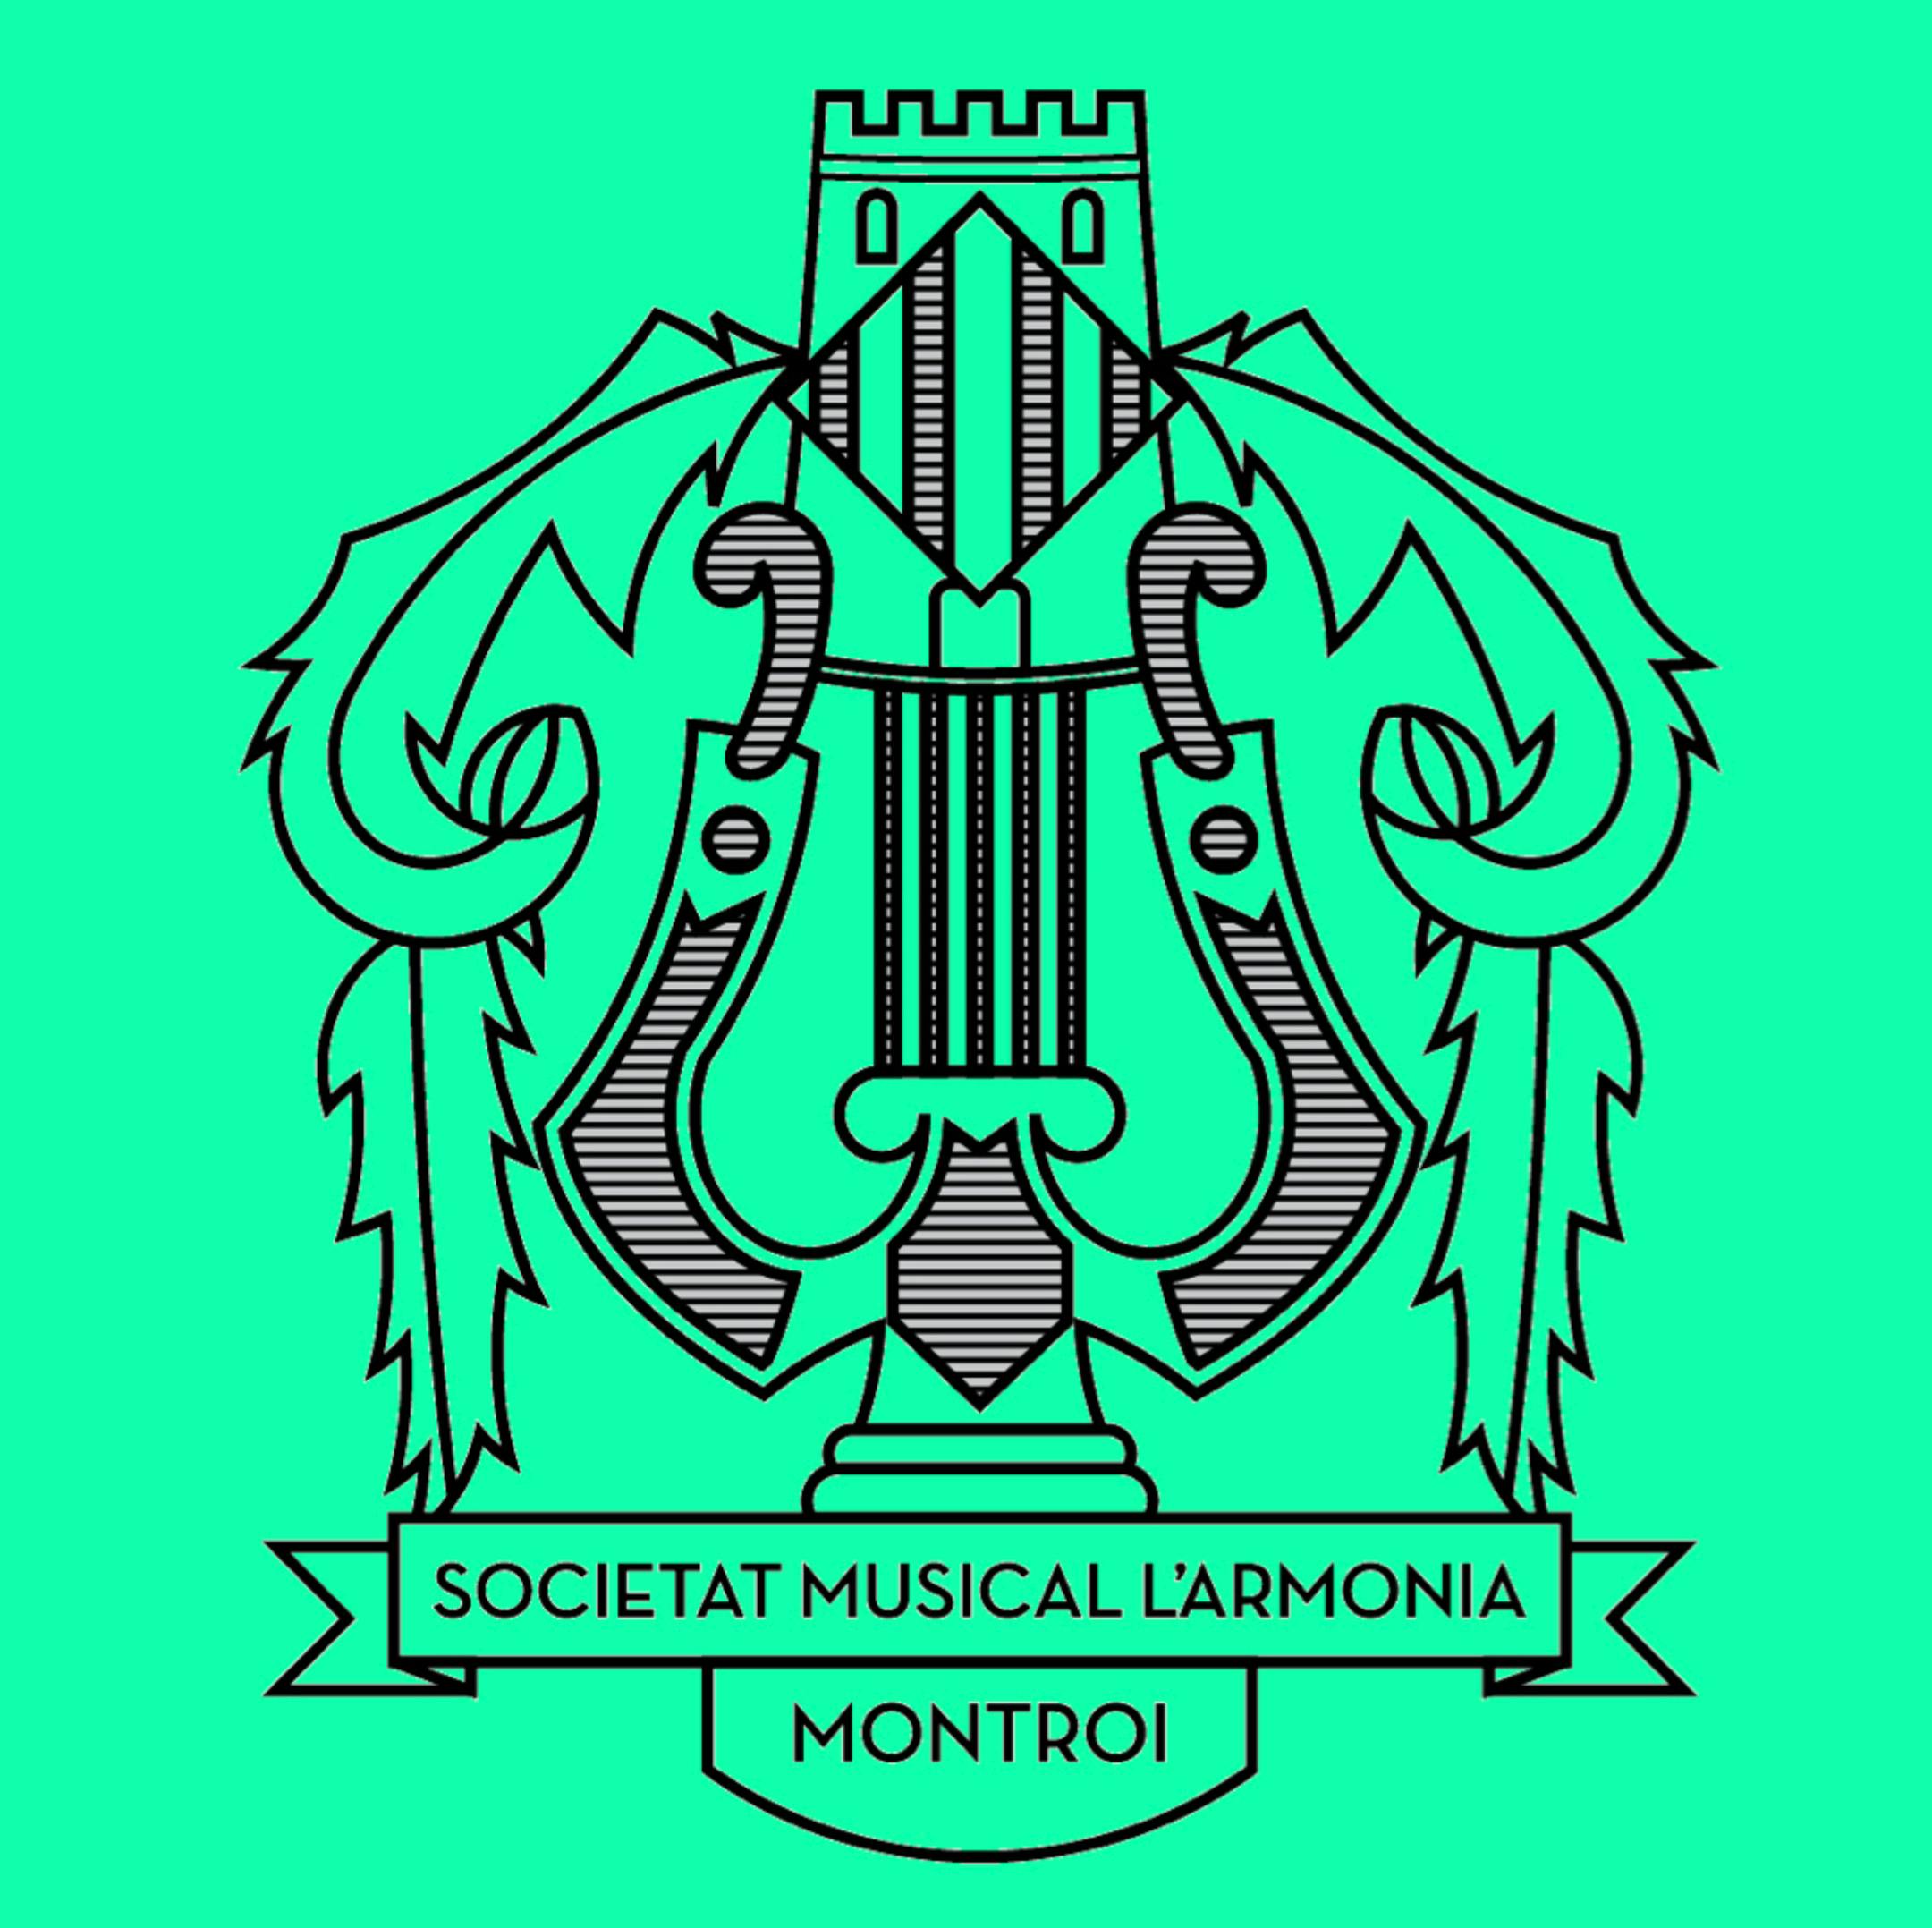 Societat Musical l’Armonia